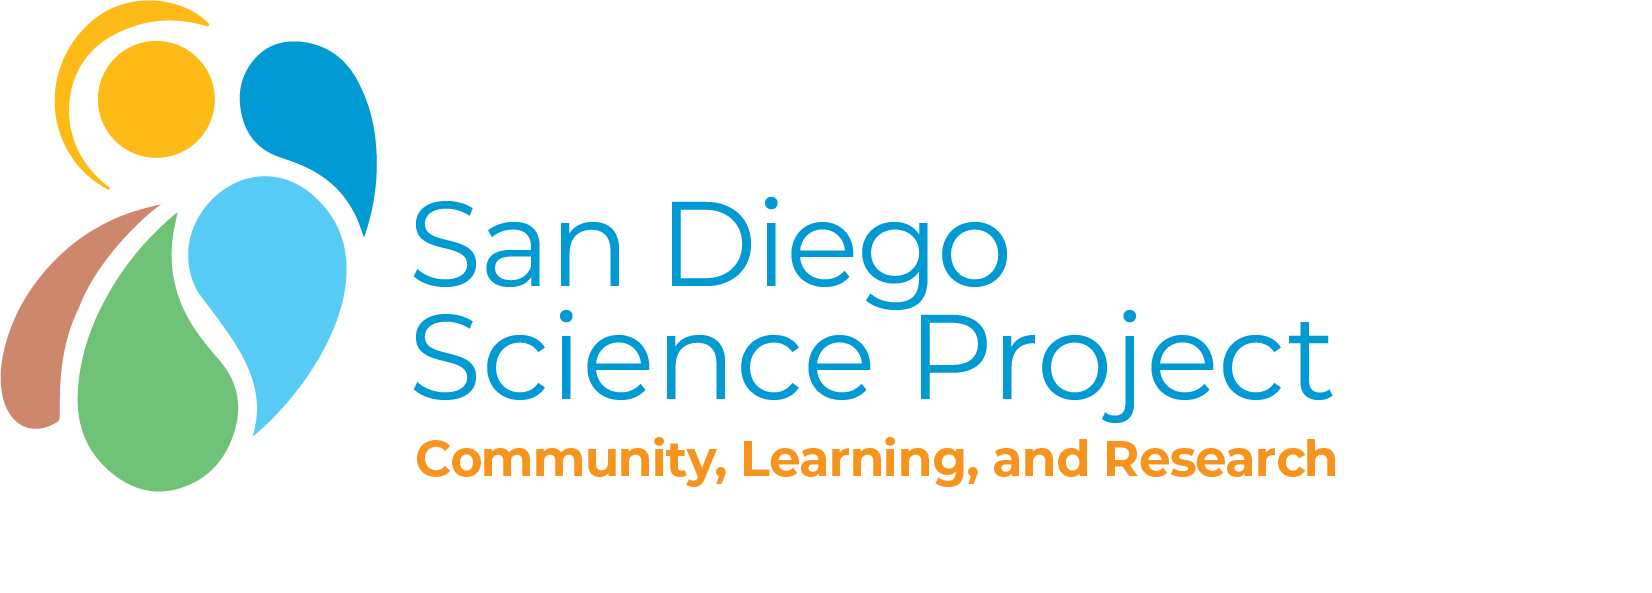 San Diego Science Project Logo